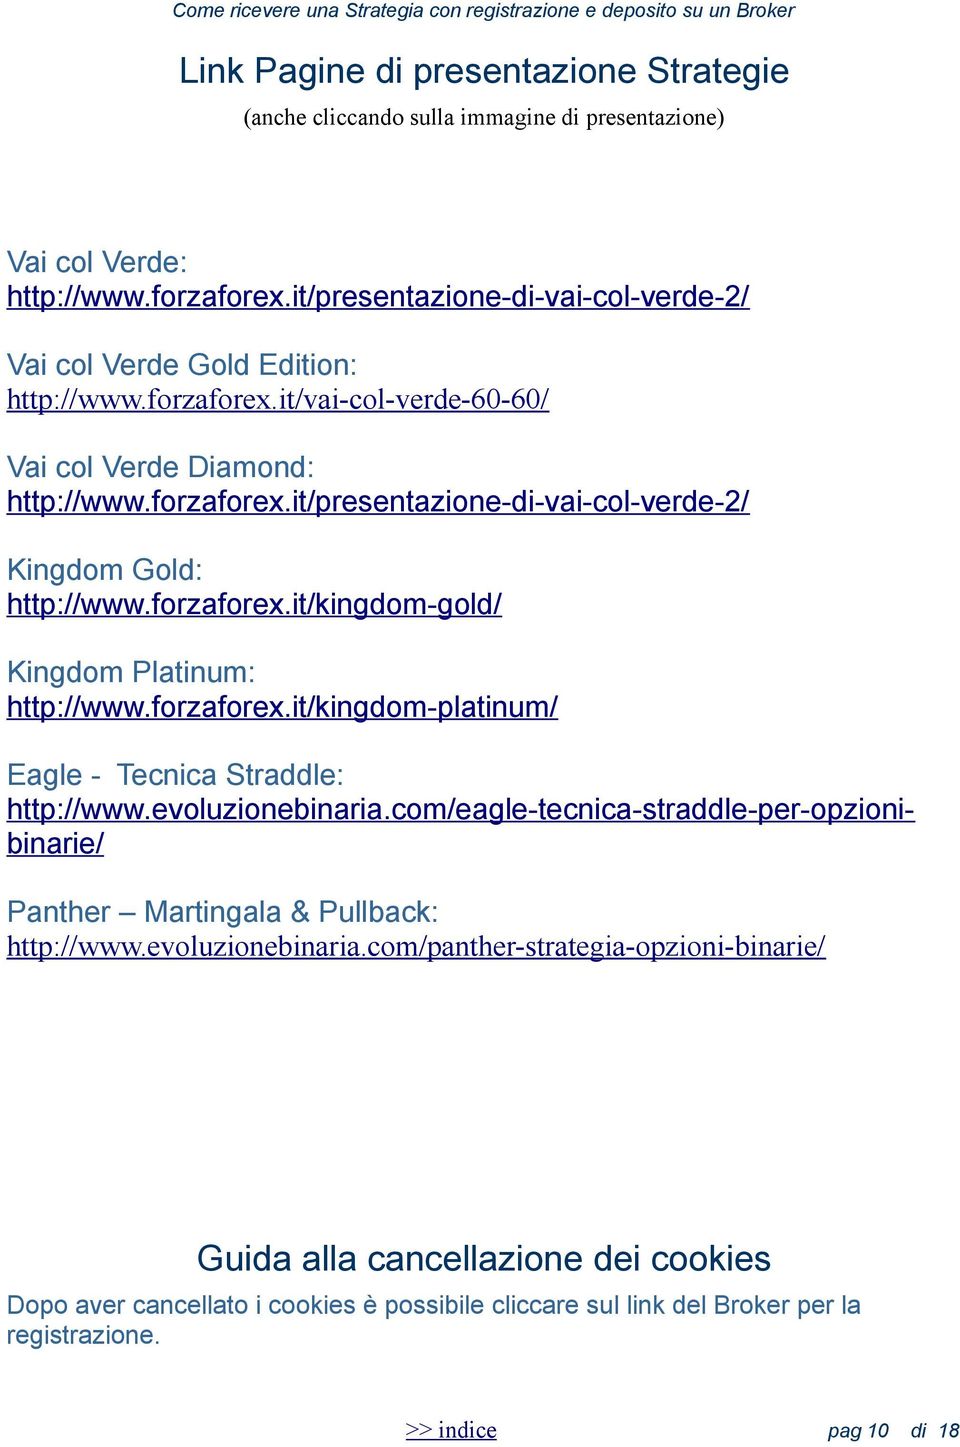 forzaforex.it/kingdom-gold/ Kingdom Platinum: http://www.forzaforex.it/kingdom-platinum/ Eagle - Tecnica Straddle: http://www.evoluzionebinaria.